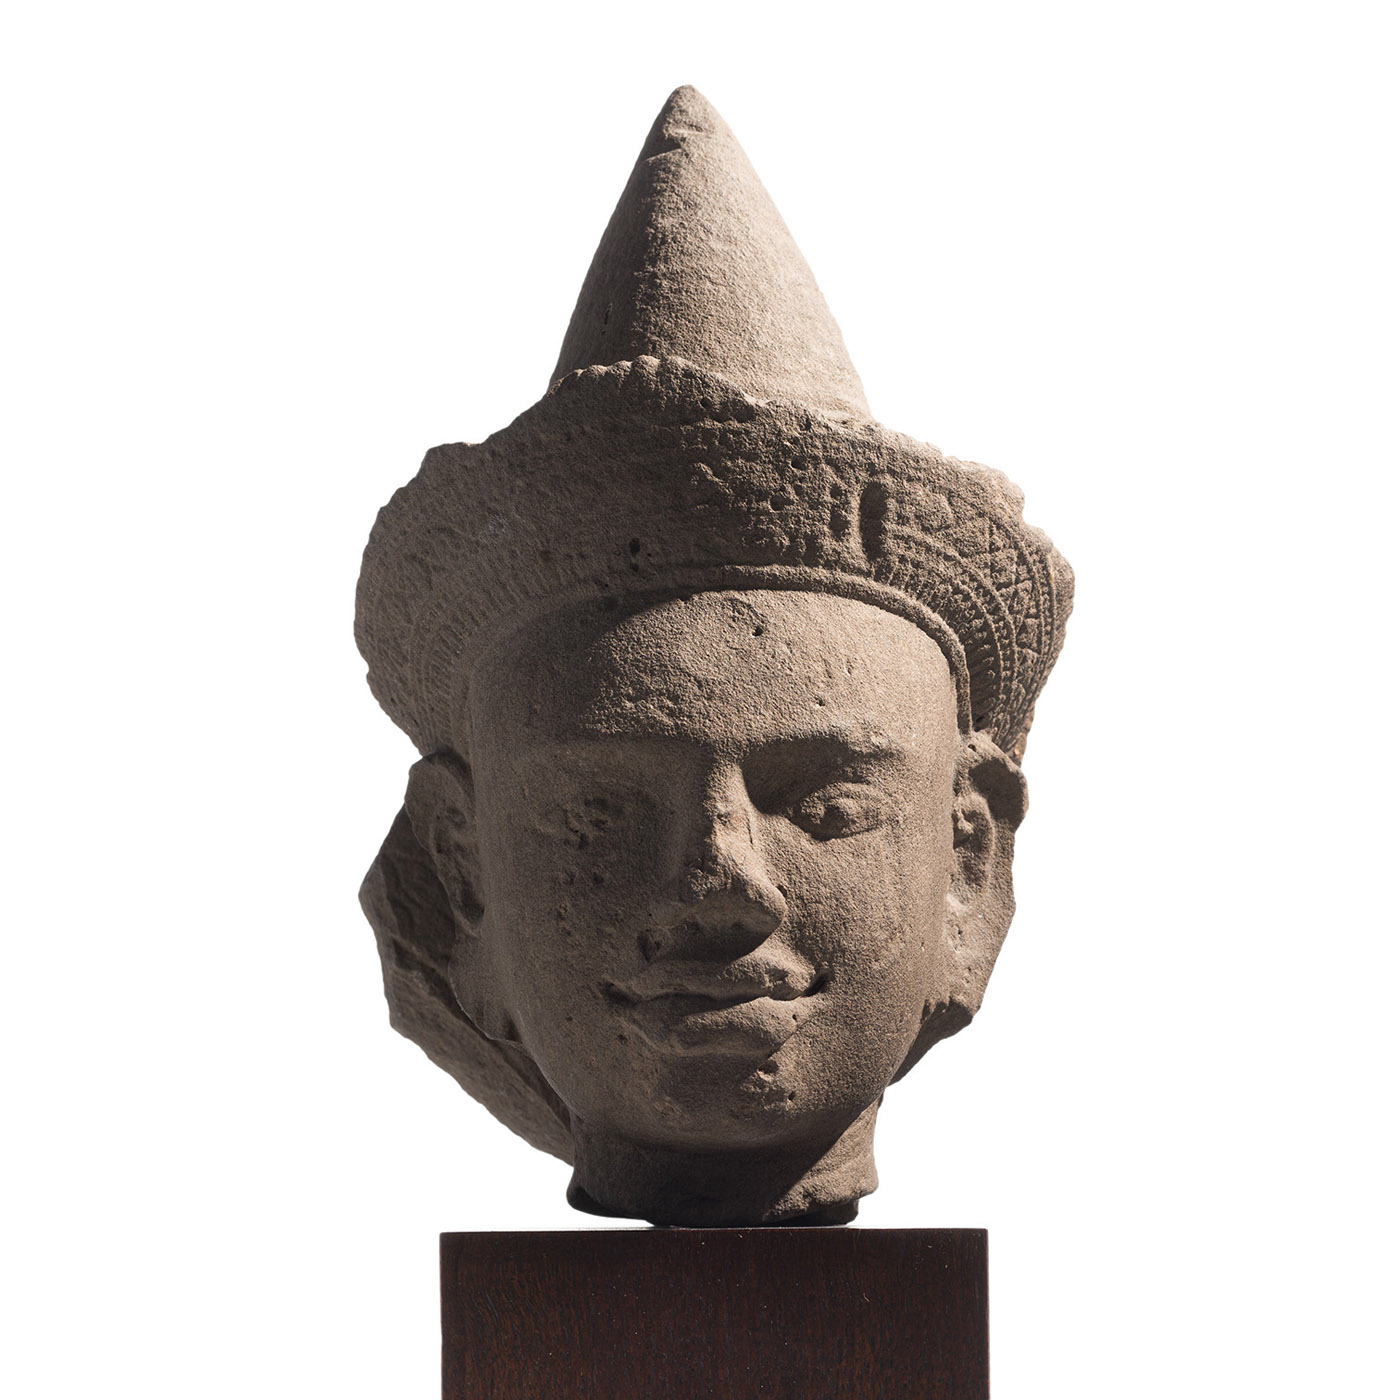 A SANDSTONE HEAD OF BUDDHAMUCHALINDA